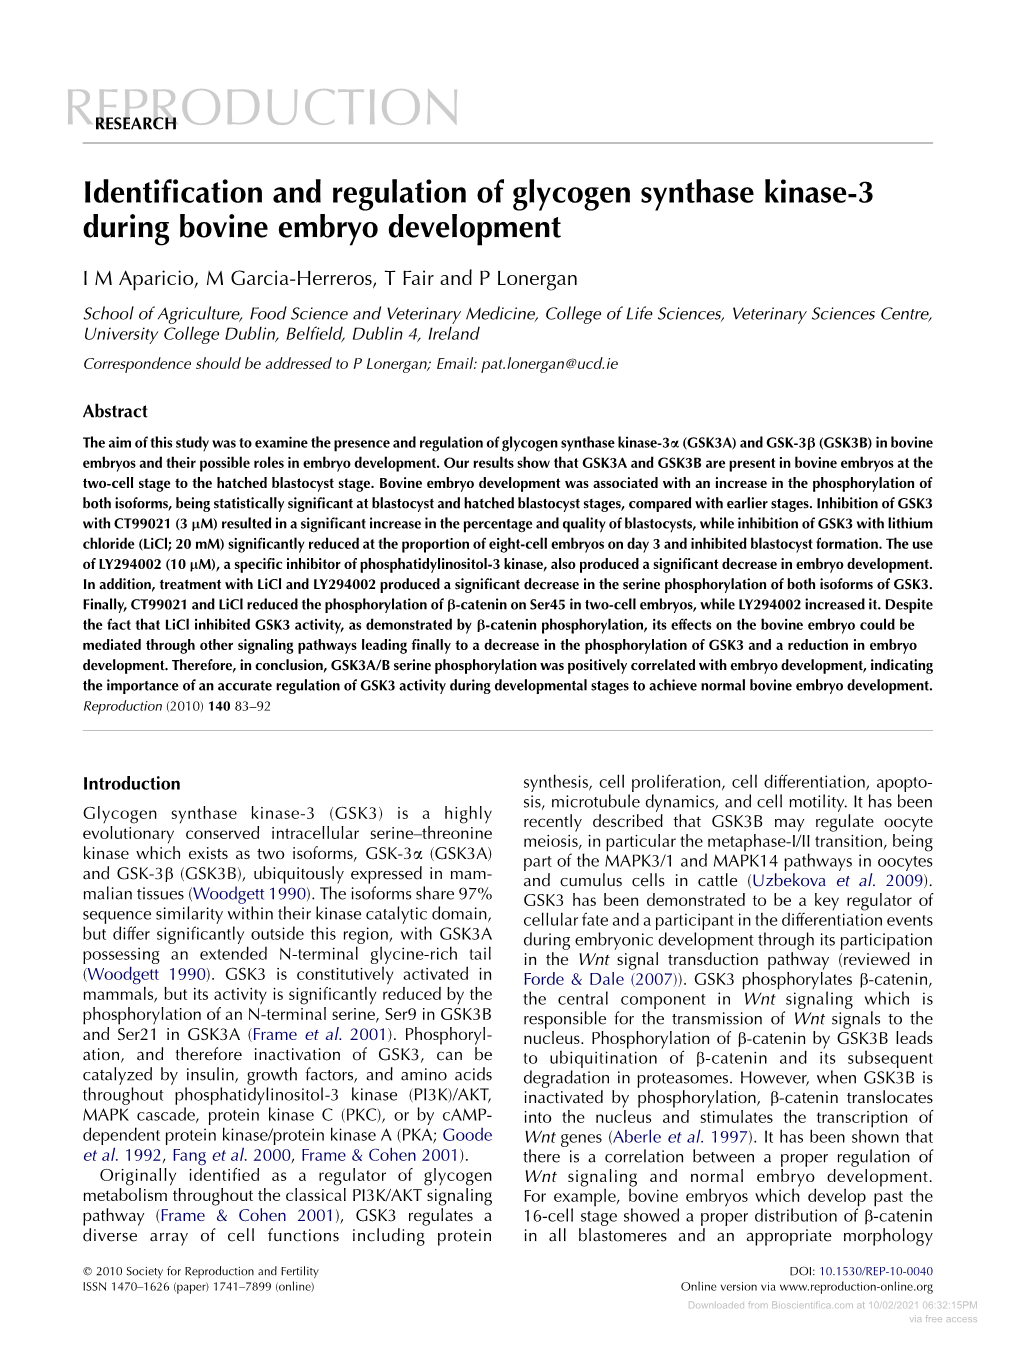 Identification and Regulation of Glycogen Synthase Kinase-3 During